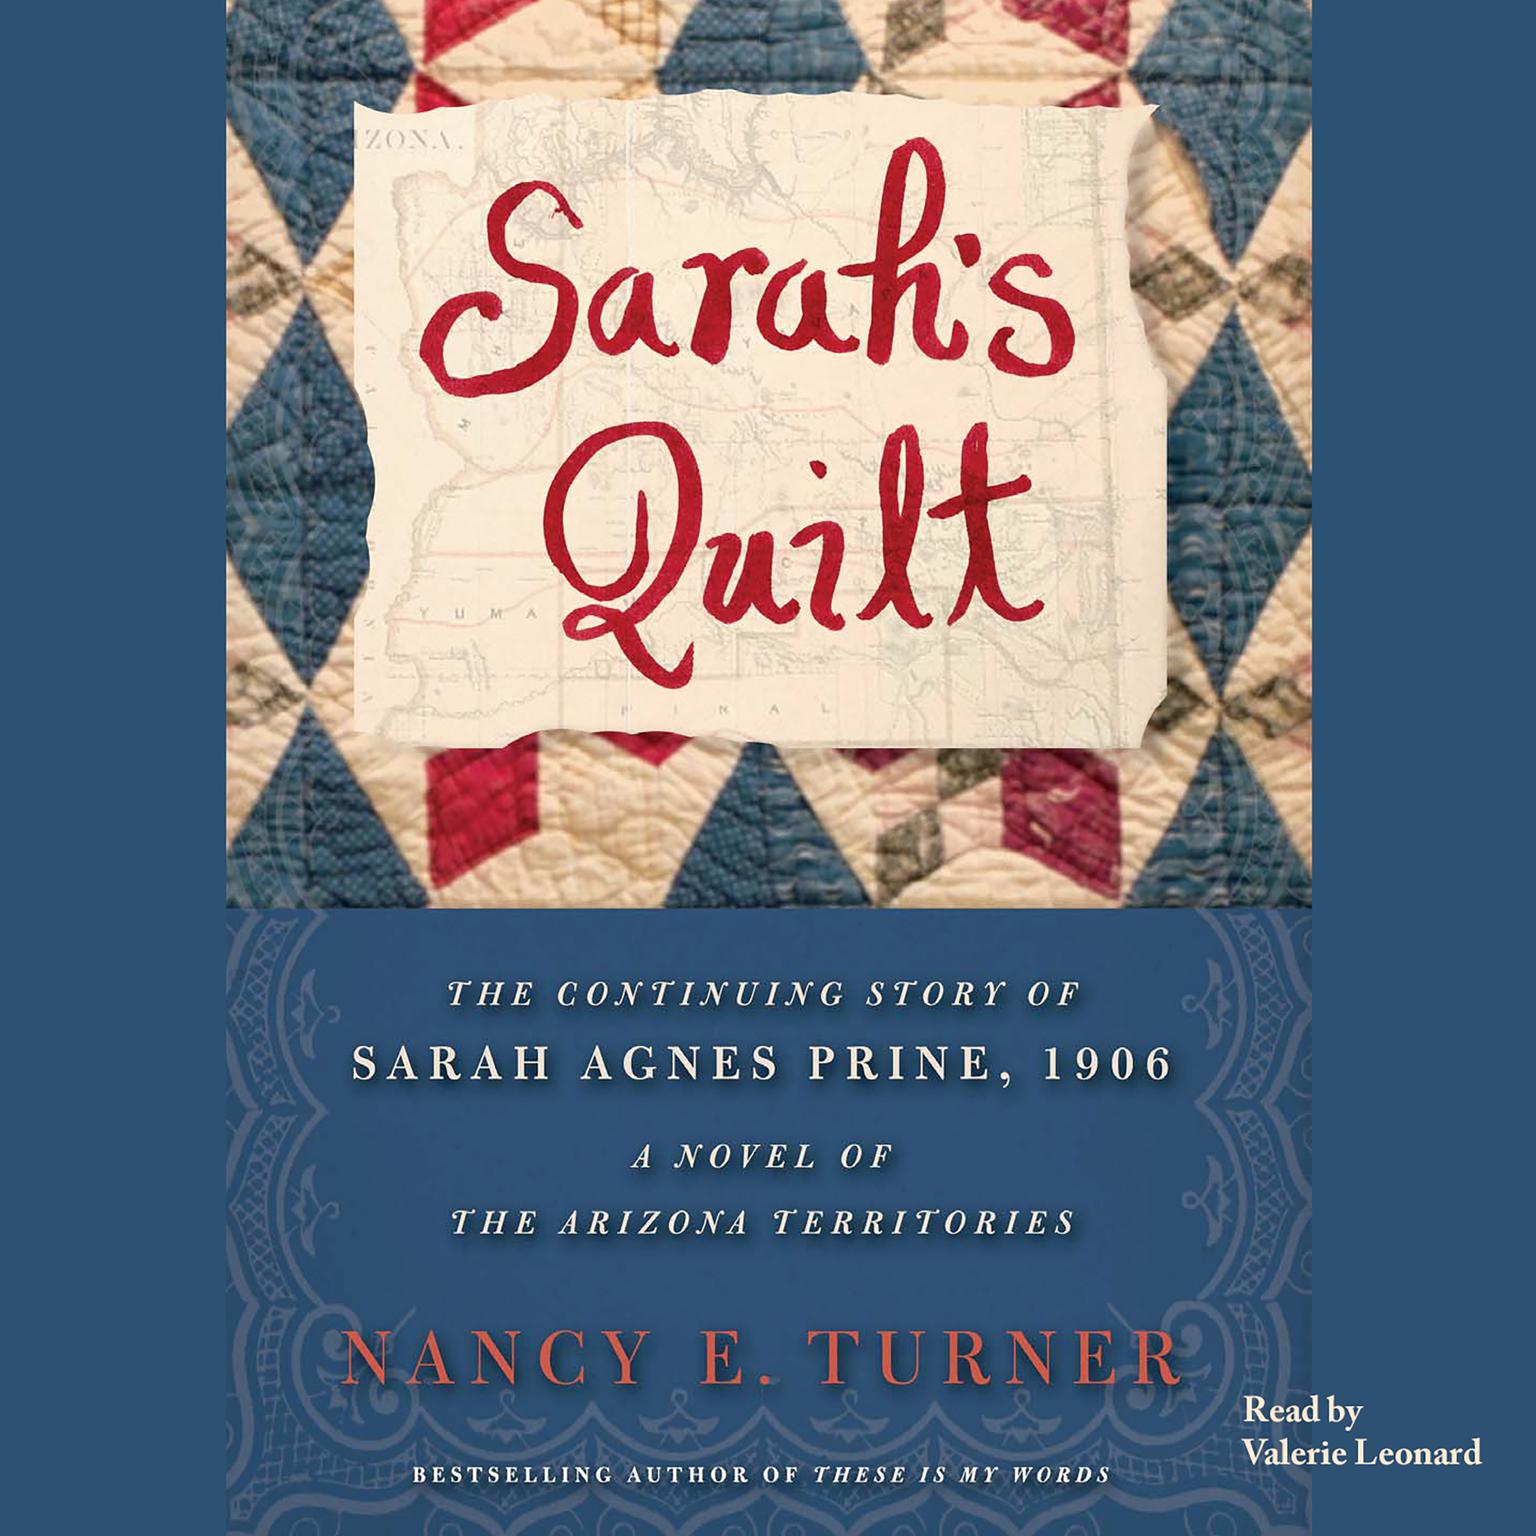 Sarah’s Quilt: A Novel of Sarah Agnes Prine and the Arizona Territories, 1906 Audiobook, by Nancy E. Turner